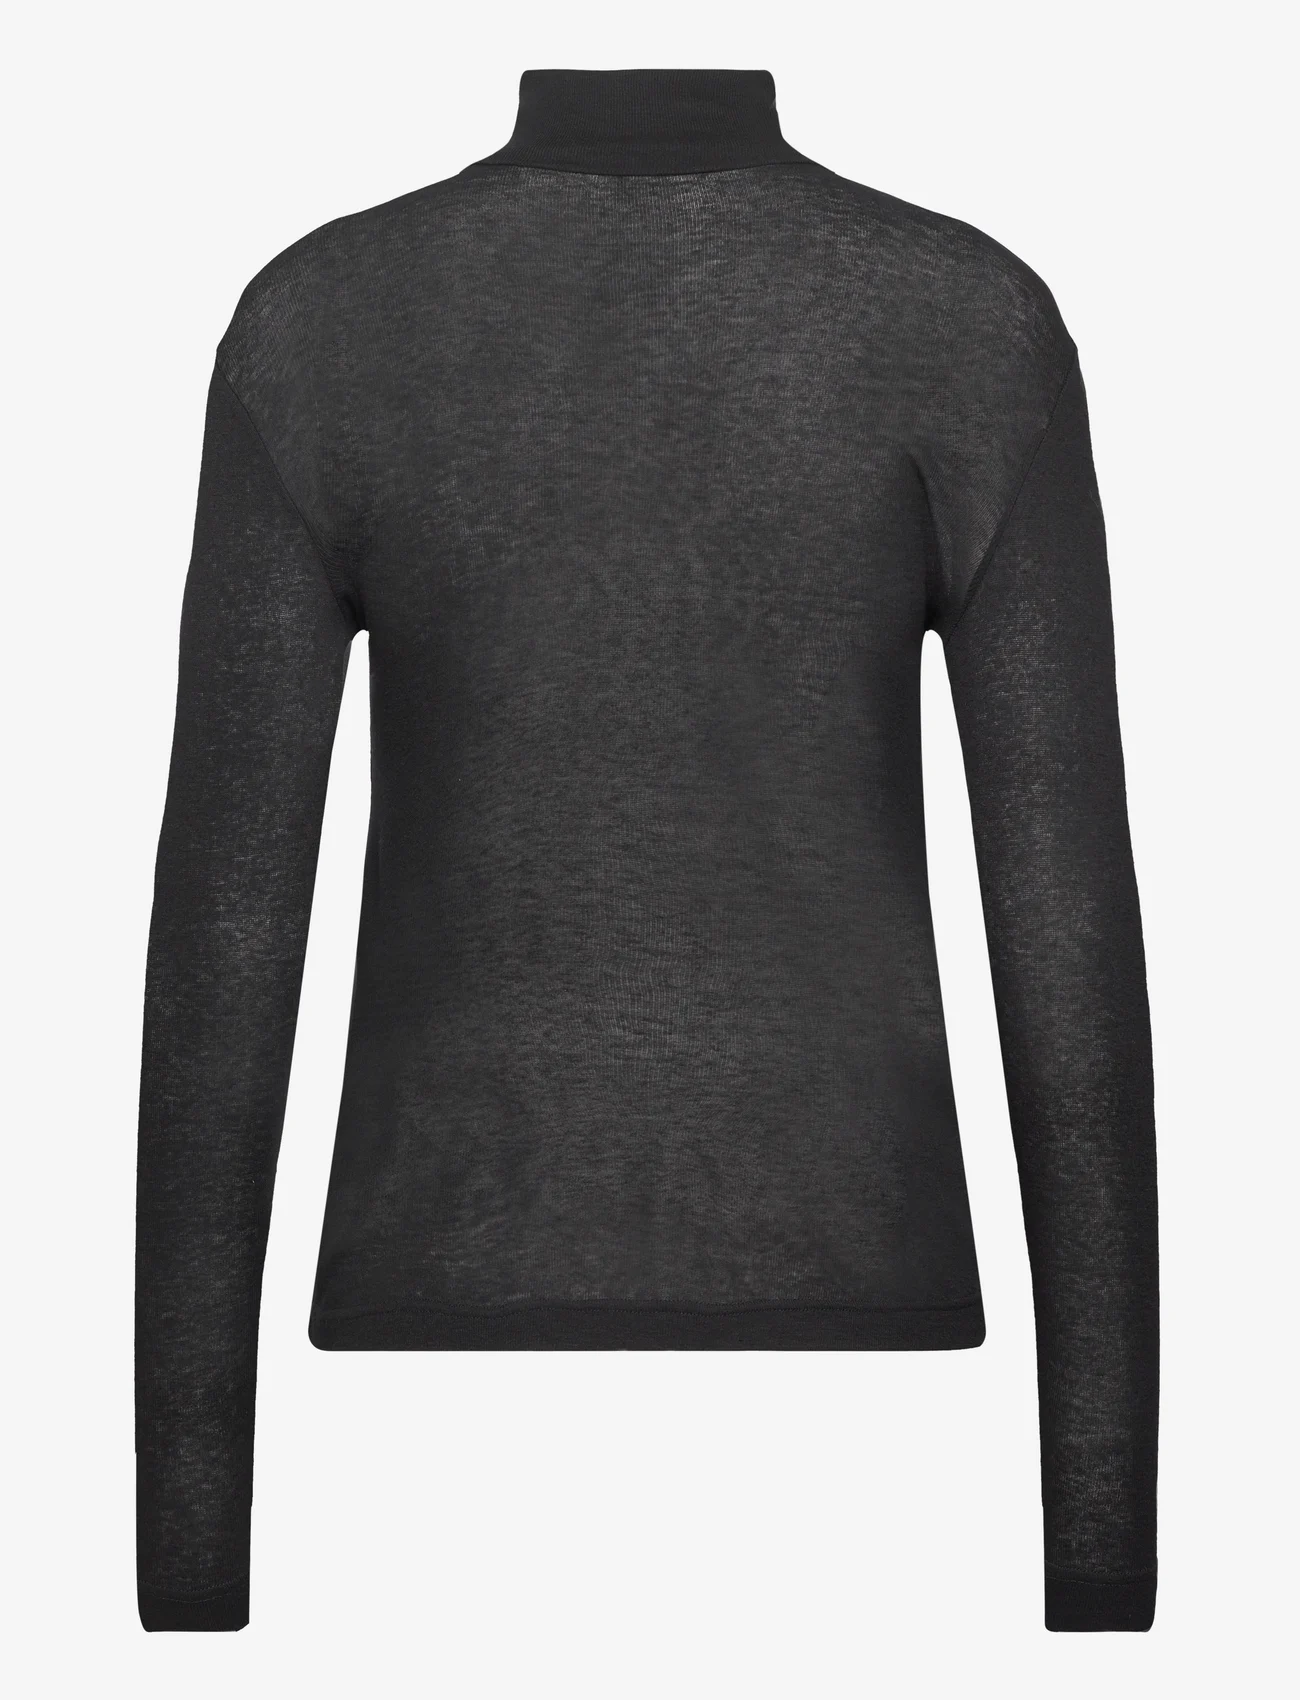 Day Birger et Mikkelsen - Eve - Soft Wool - megztiniai su aukšta apykakle - black - 1